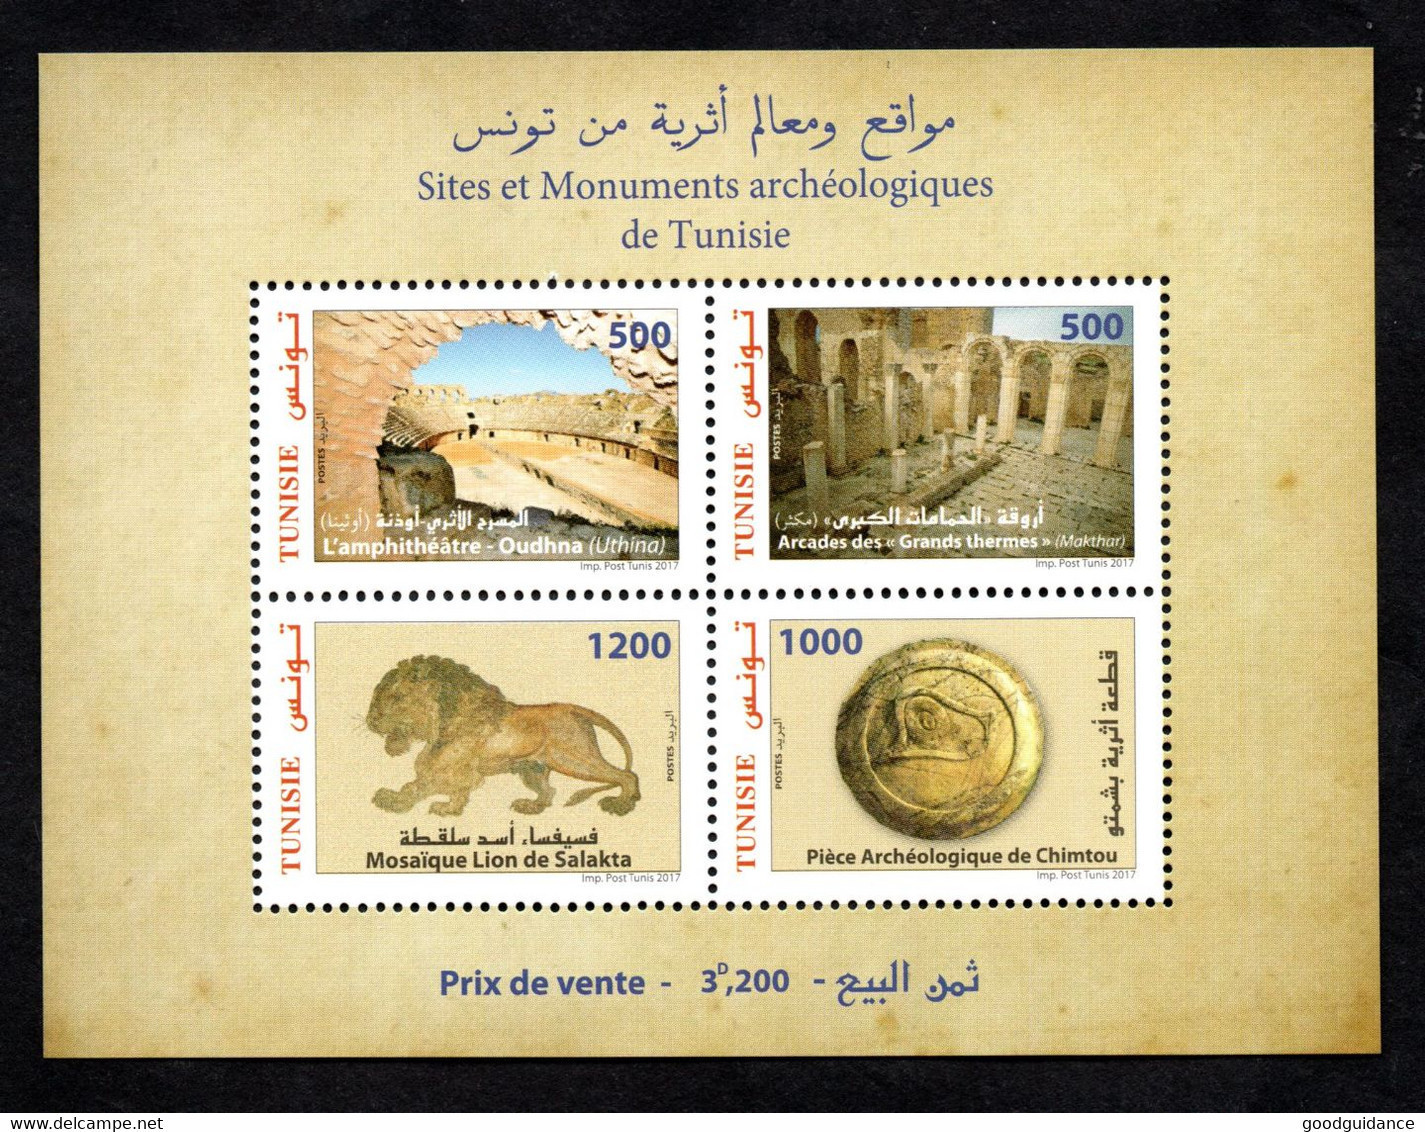 2017- Tunisia- Tunisie- Archeological Sites And Monuments- Sites Et Monuments Archéologiques- Minisheet - Bloc- MNH** - Tunesien (1956-...)